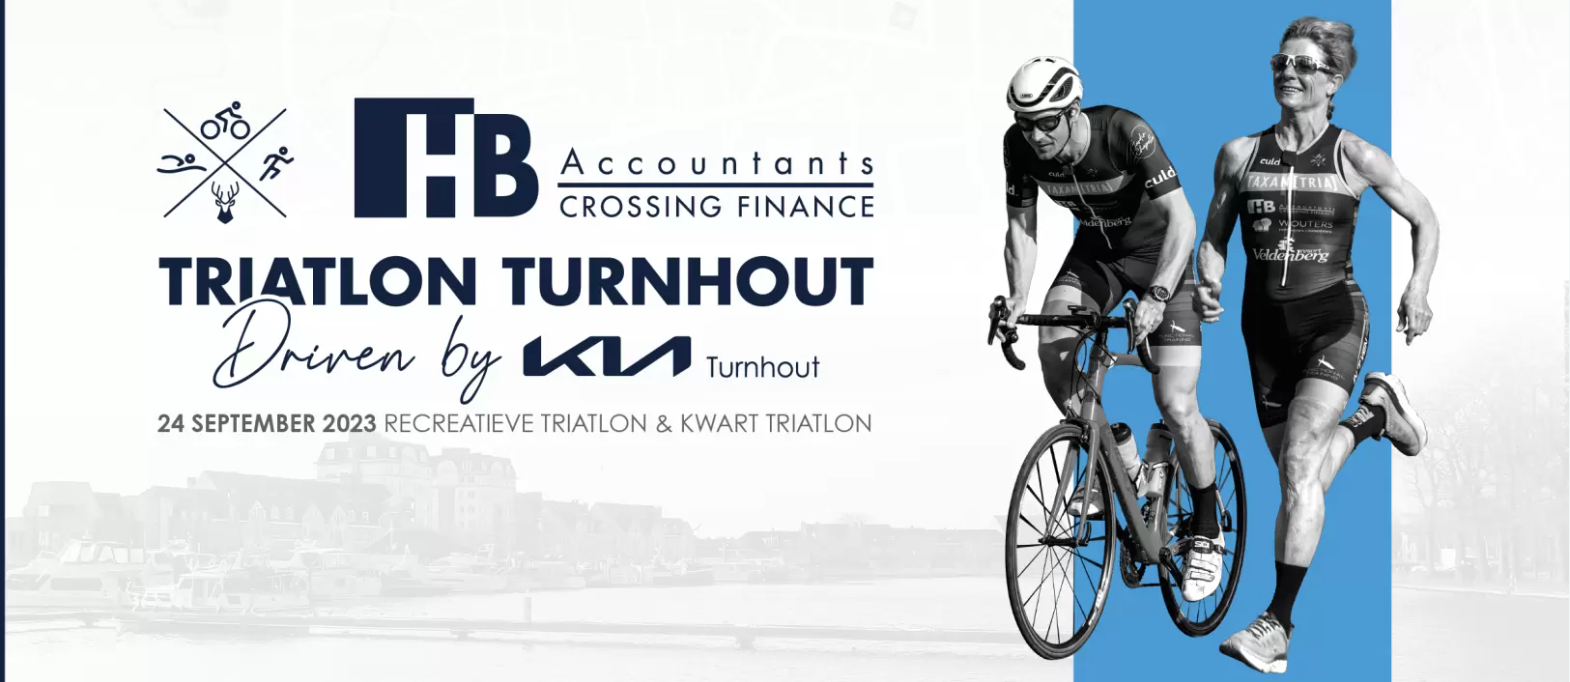 HB Accountants Triatlon Turnhout